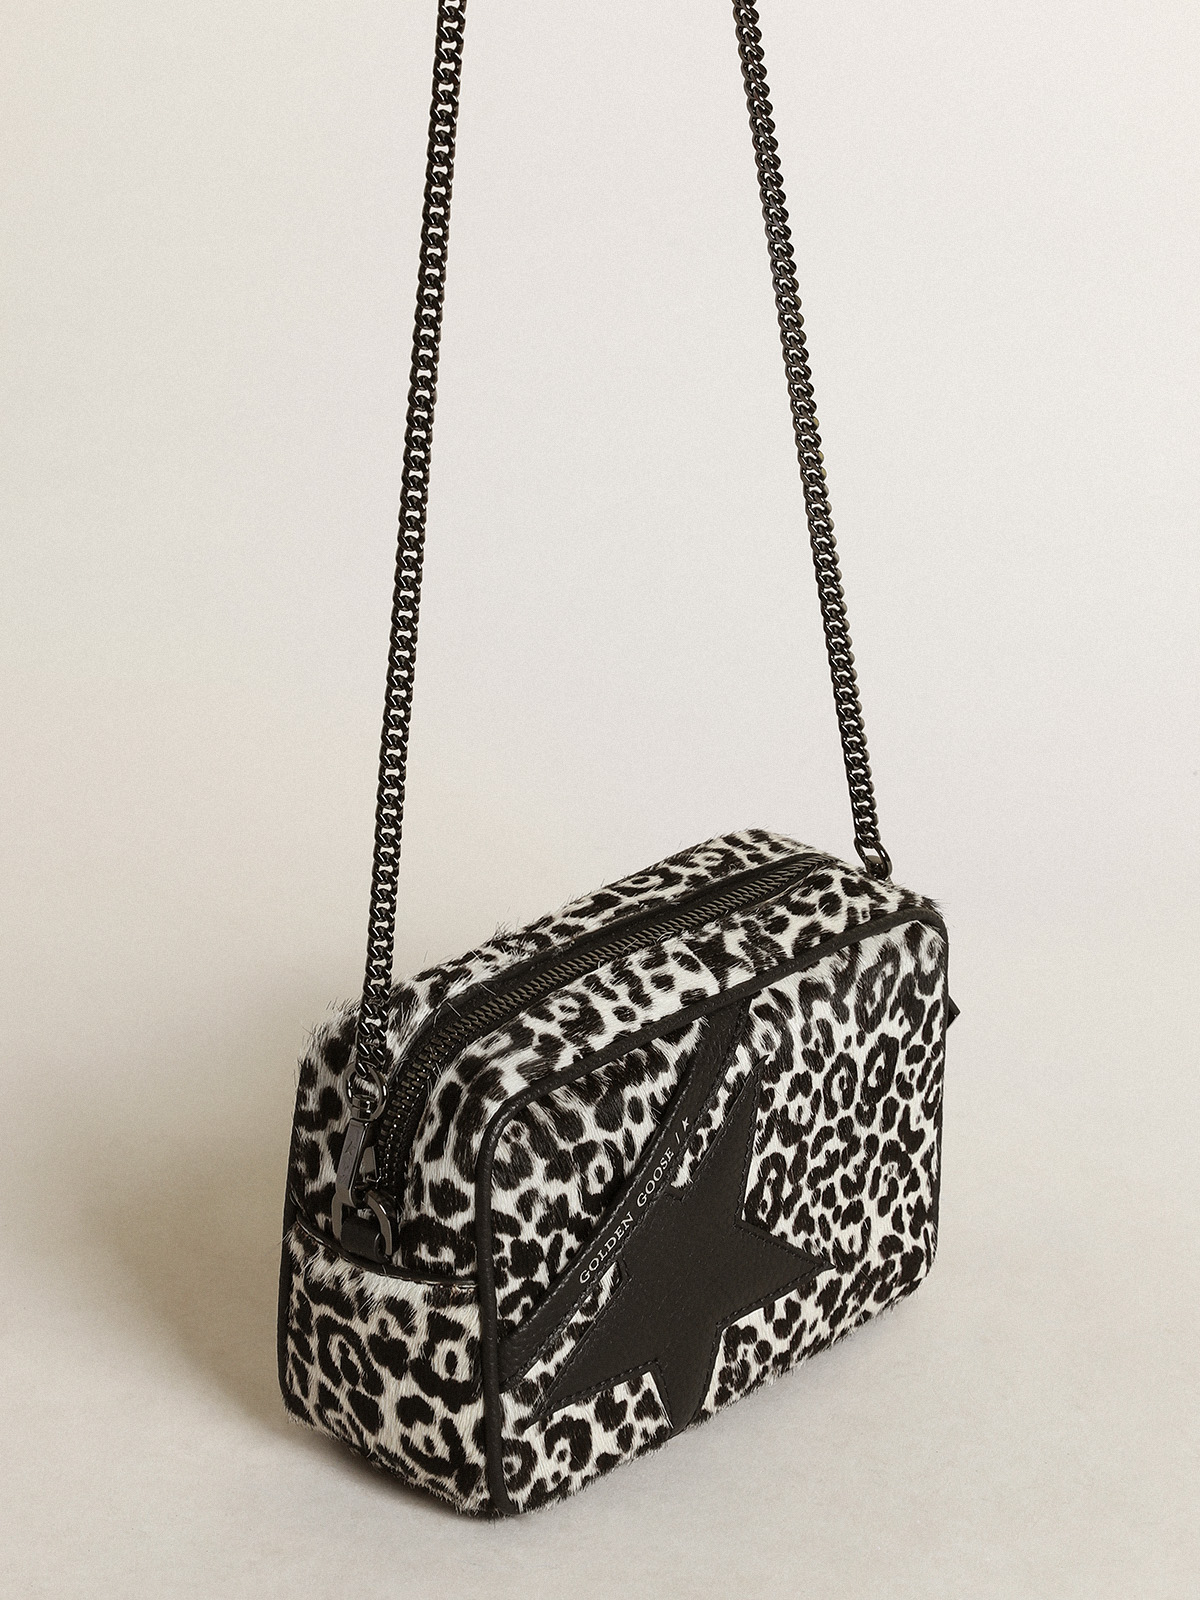 Women's Mini Star Bag in black and white leopard print pony skin